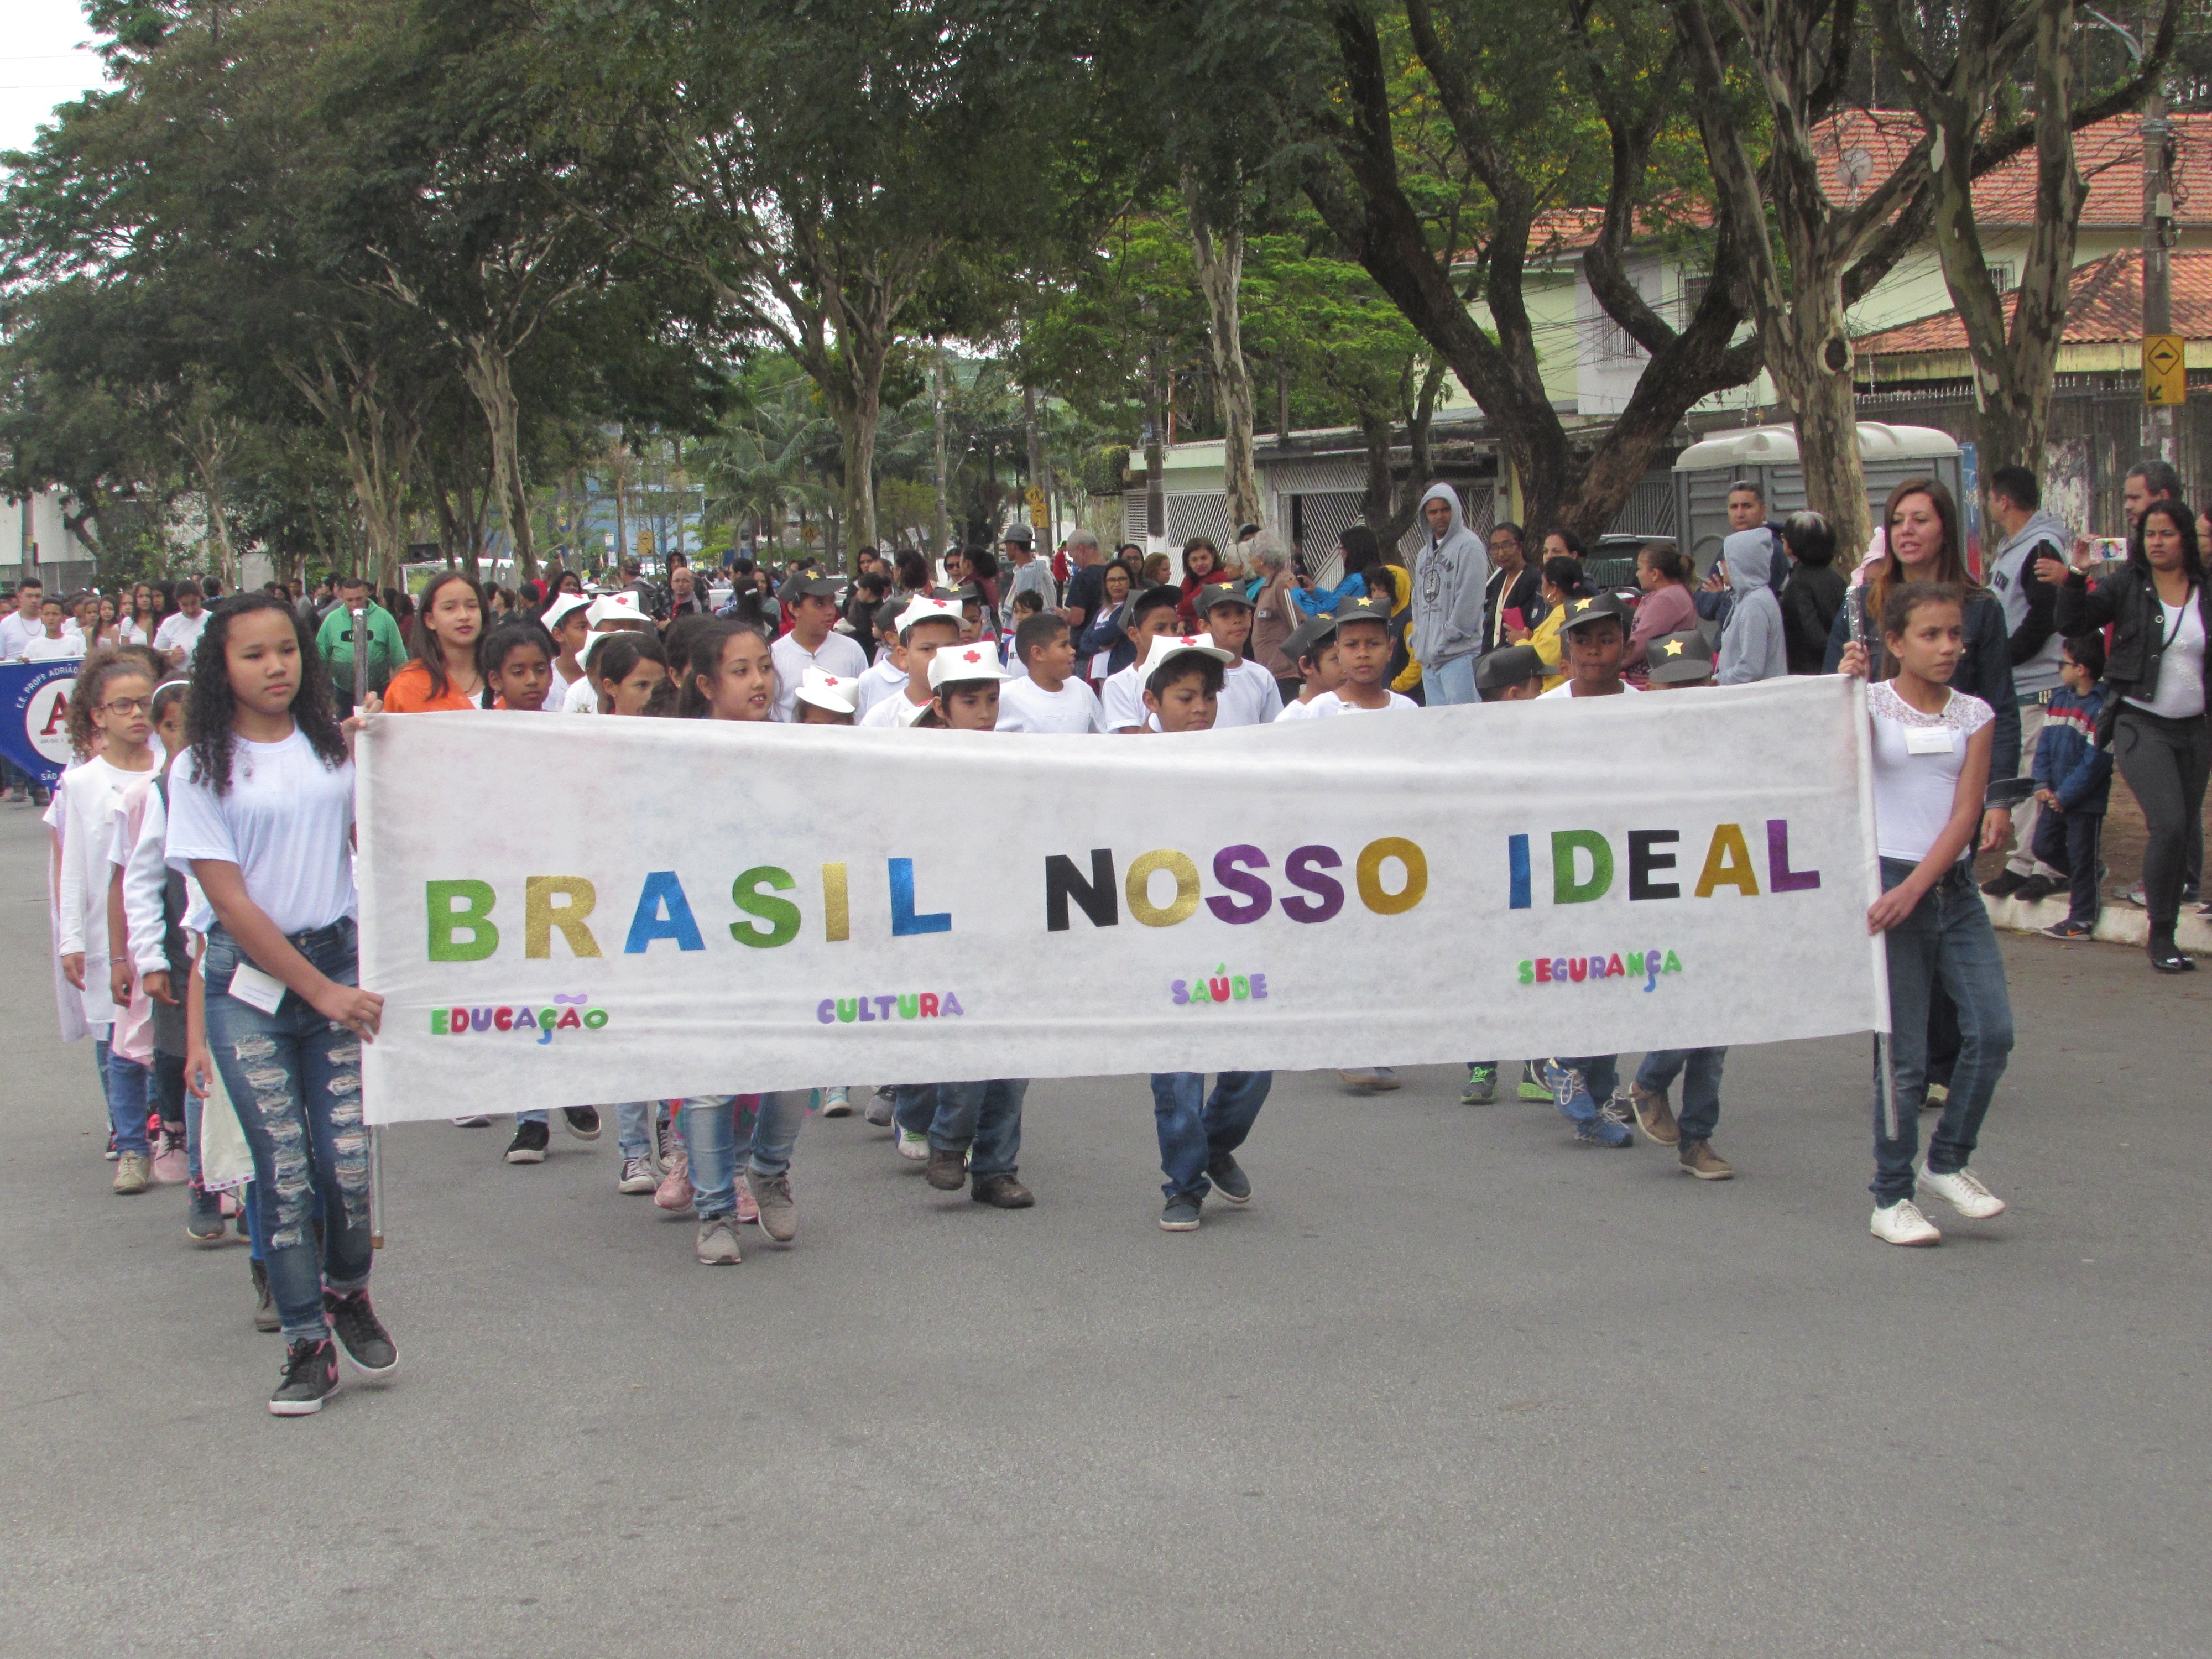 Brasil nosso ideal